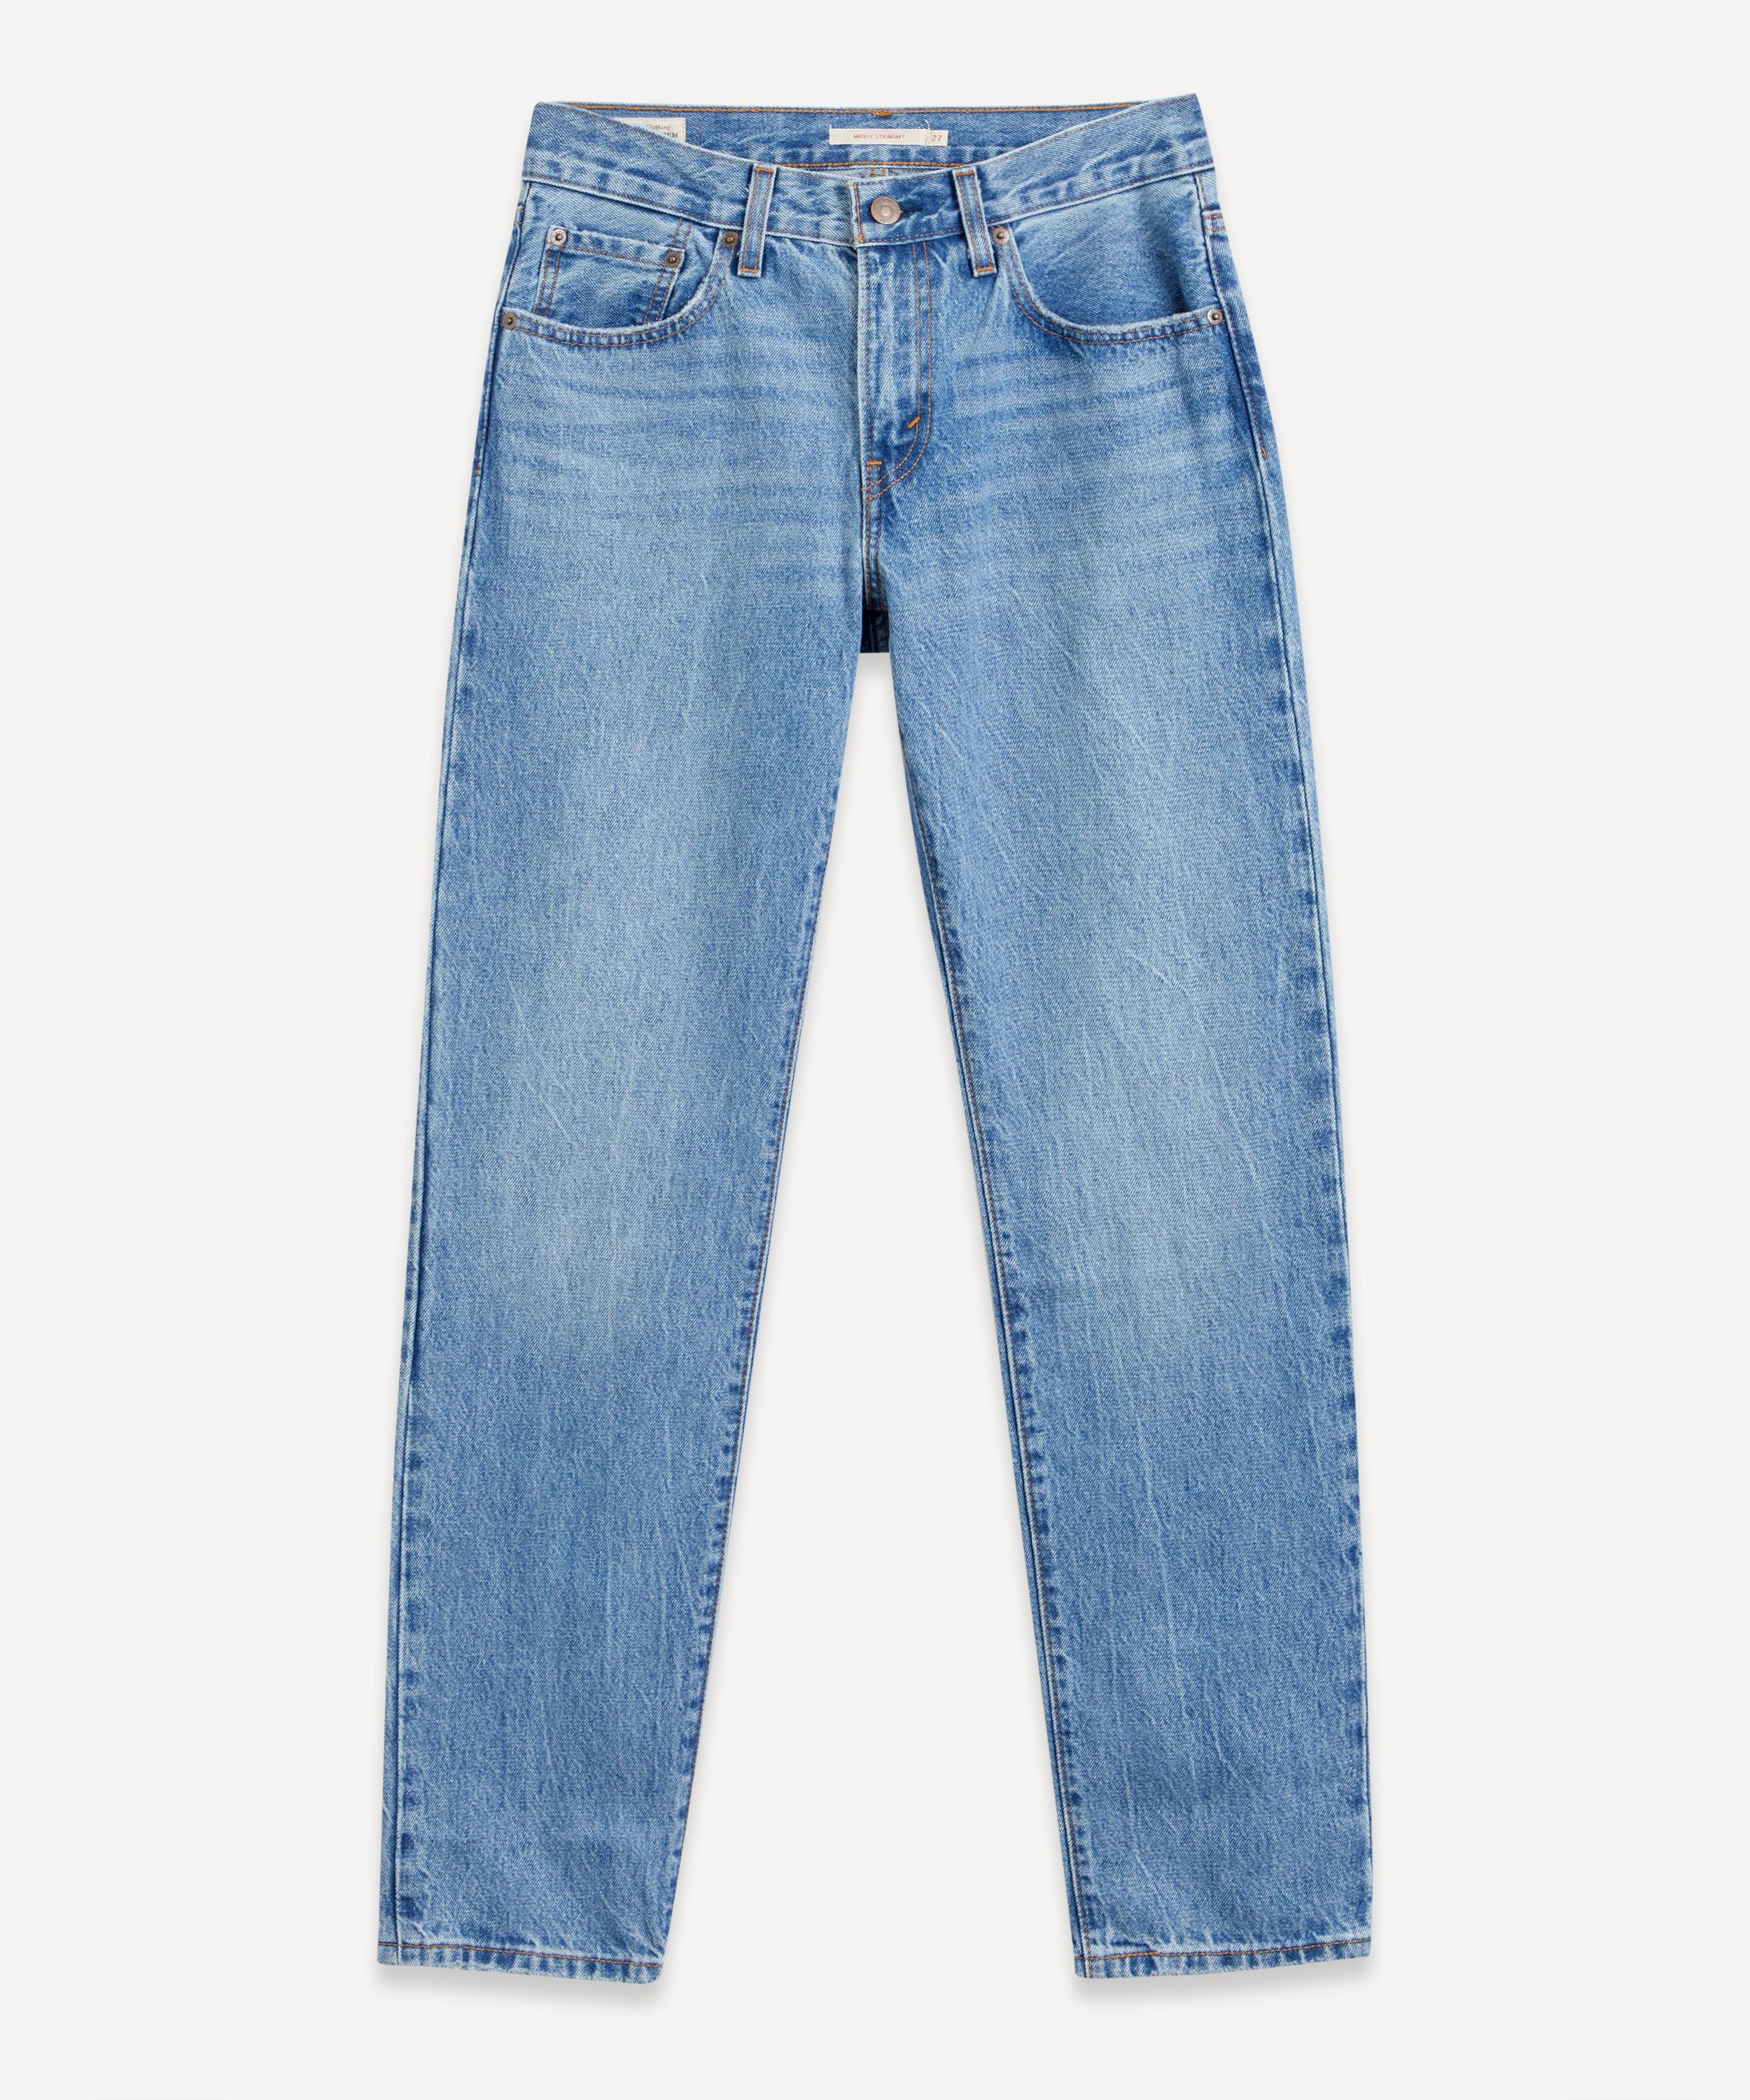 Jeans | Women's Denim Jeans | Liberty